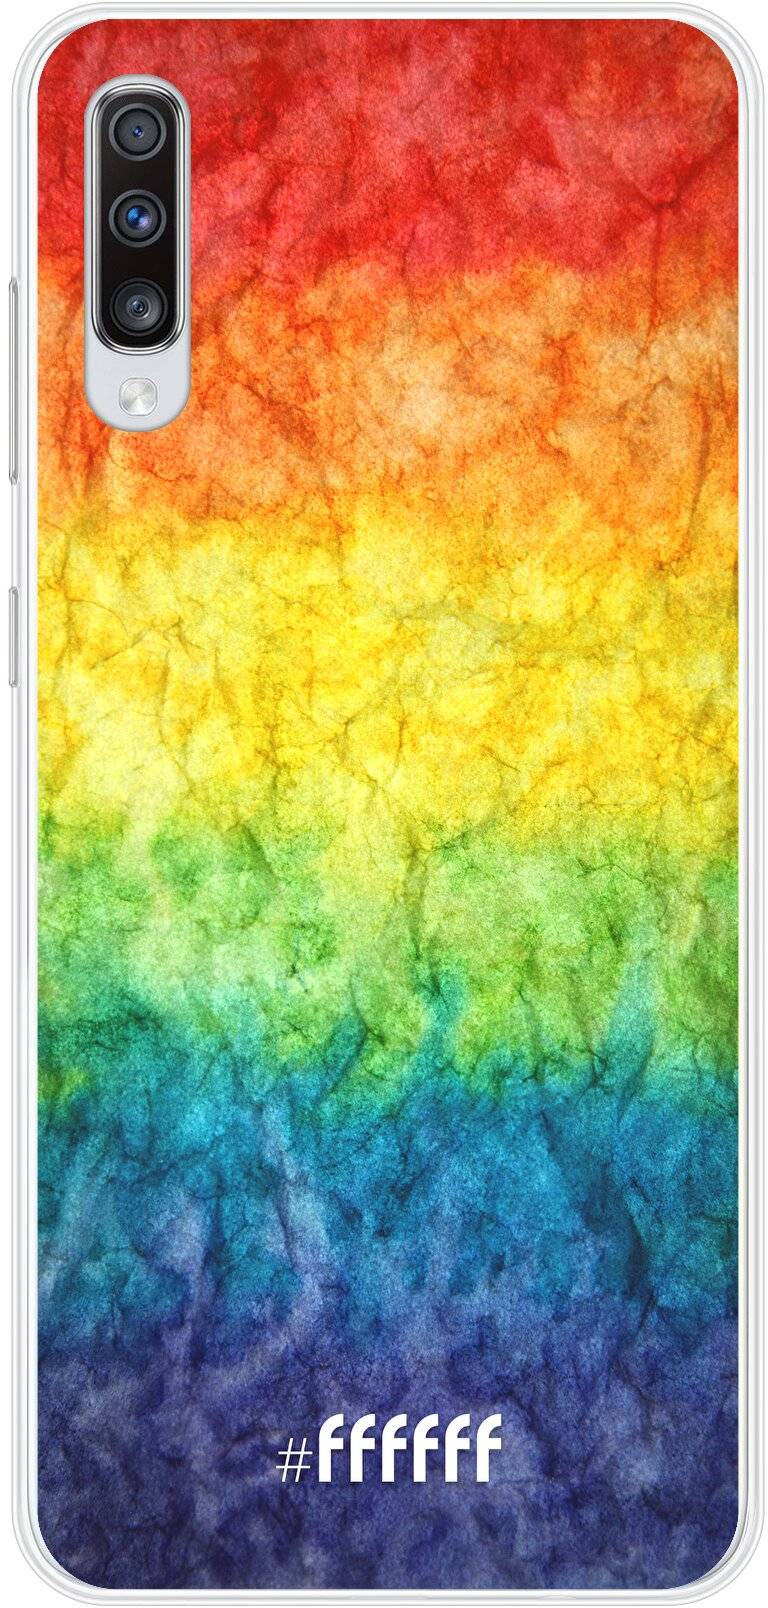 Rainbow Veins Galaxy A70